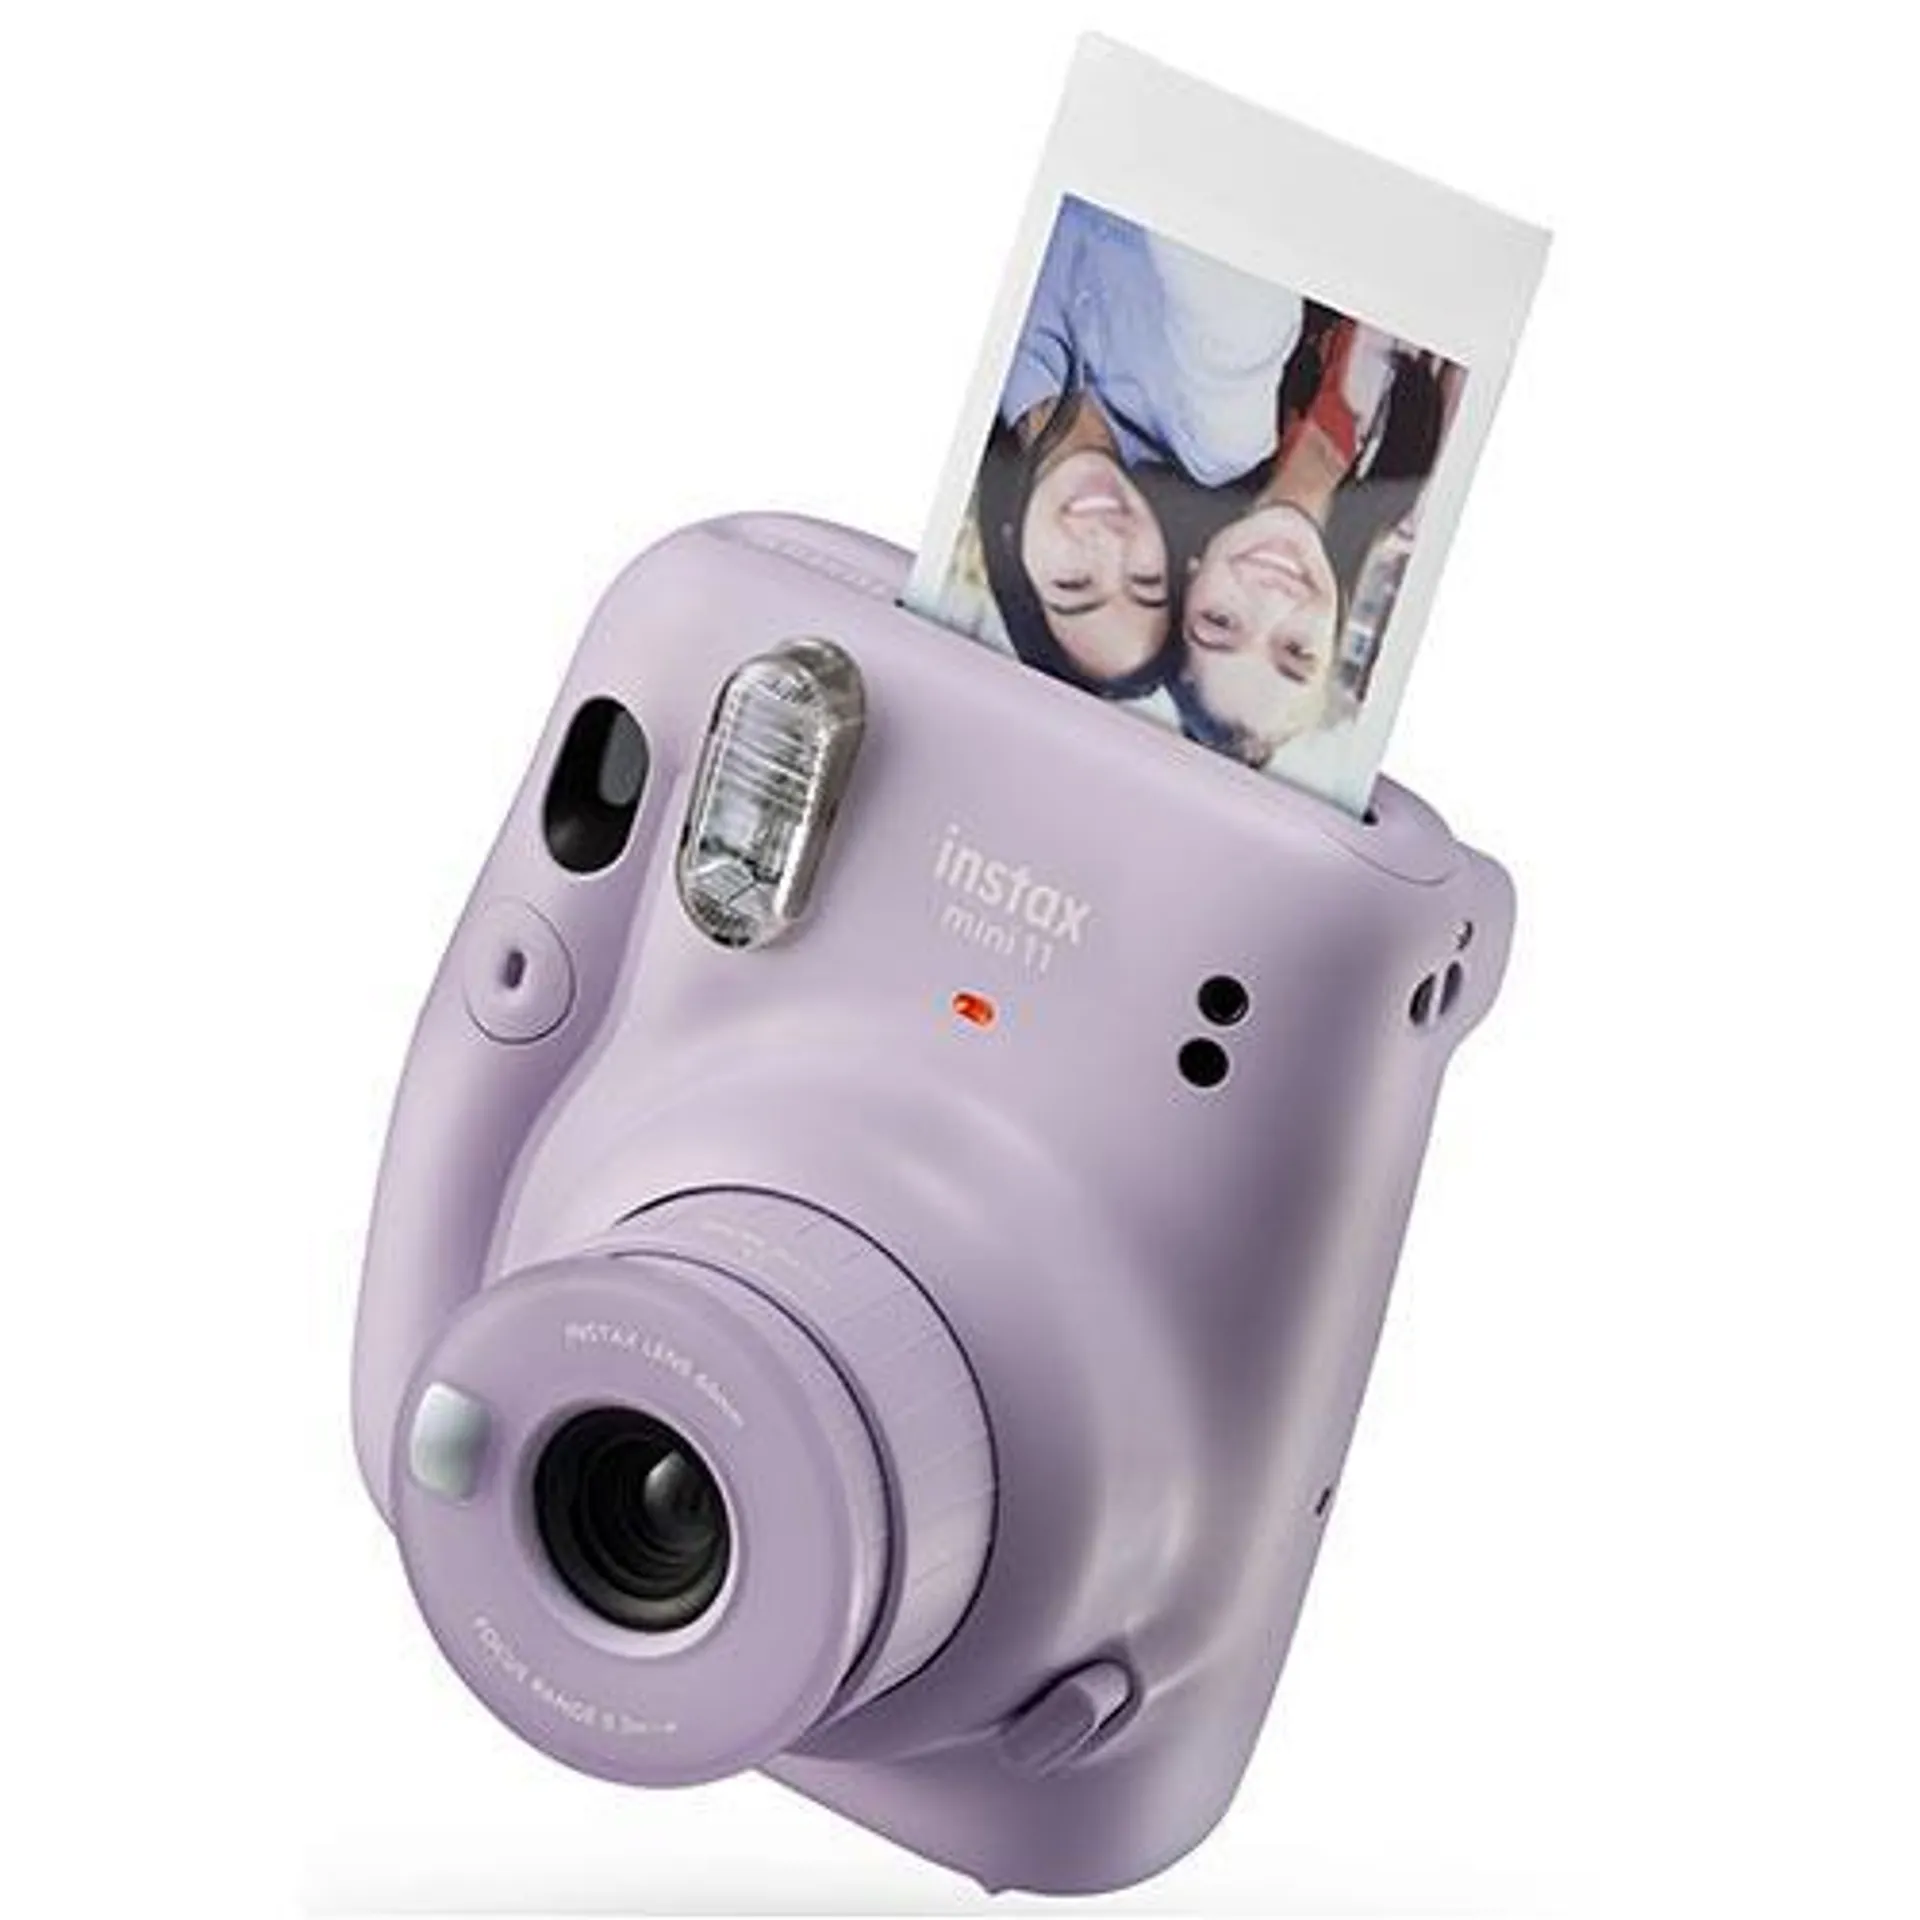 instax mini 11 Instant Camera Lilac Purple